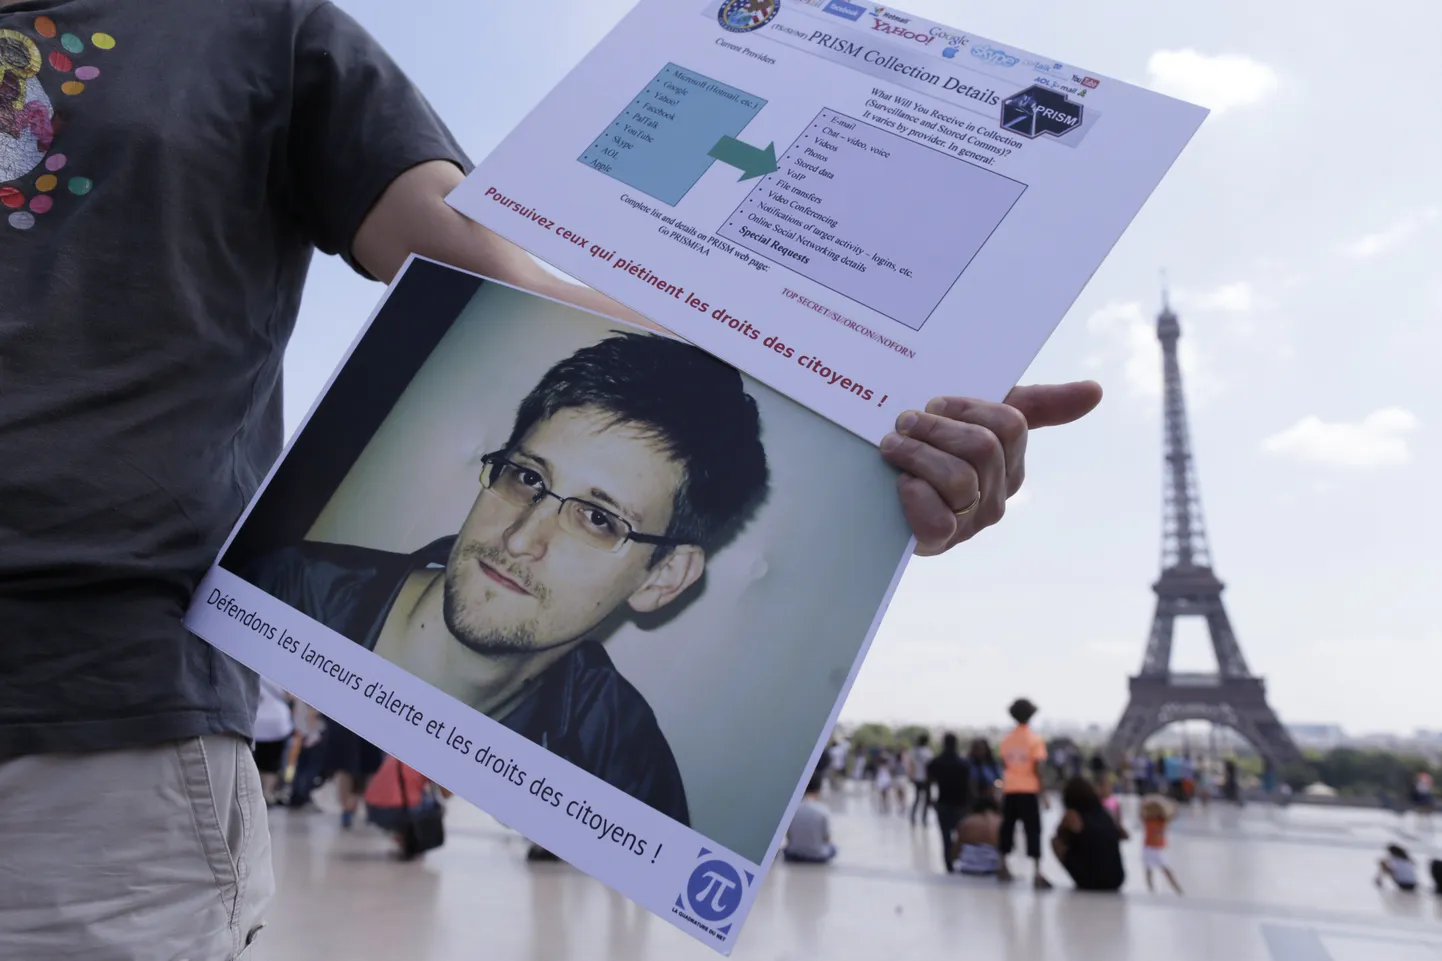 Изображение Эдварда Сноудена на плакате